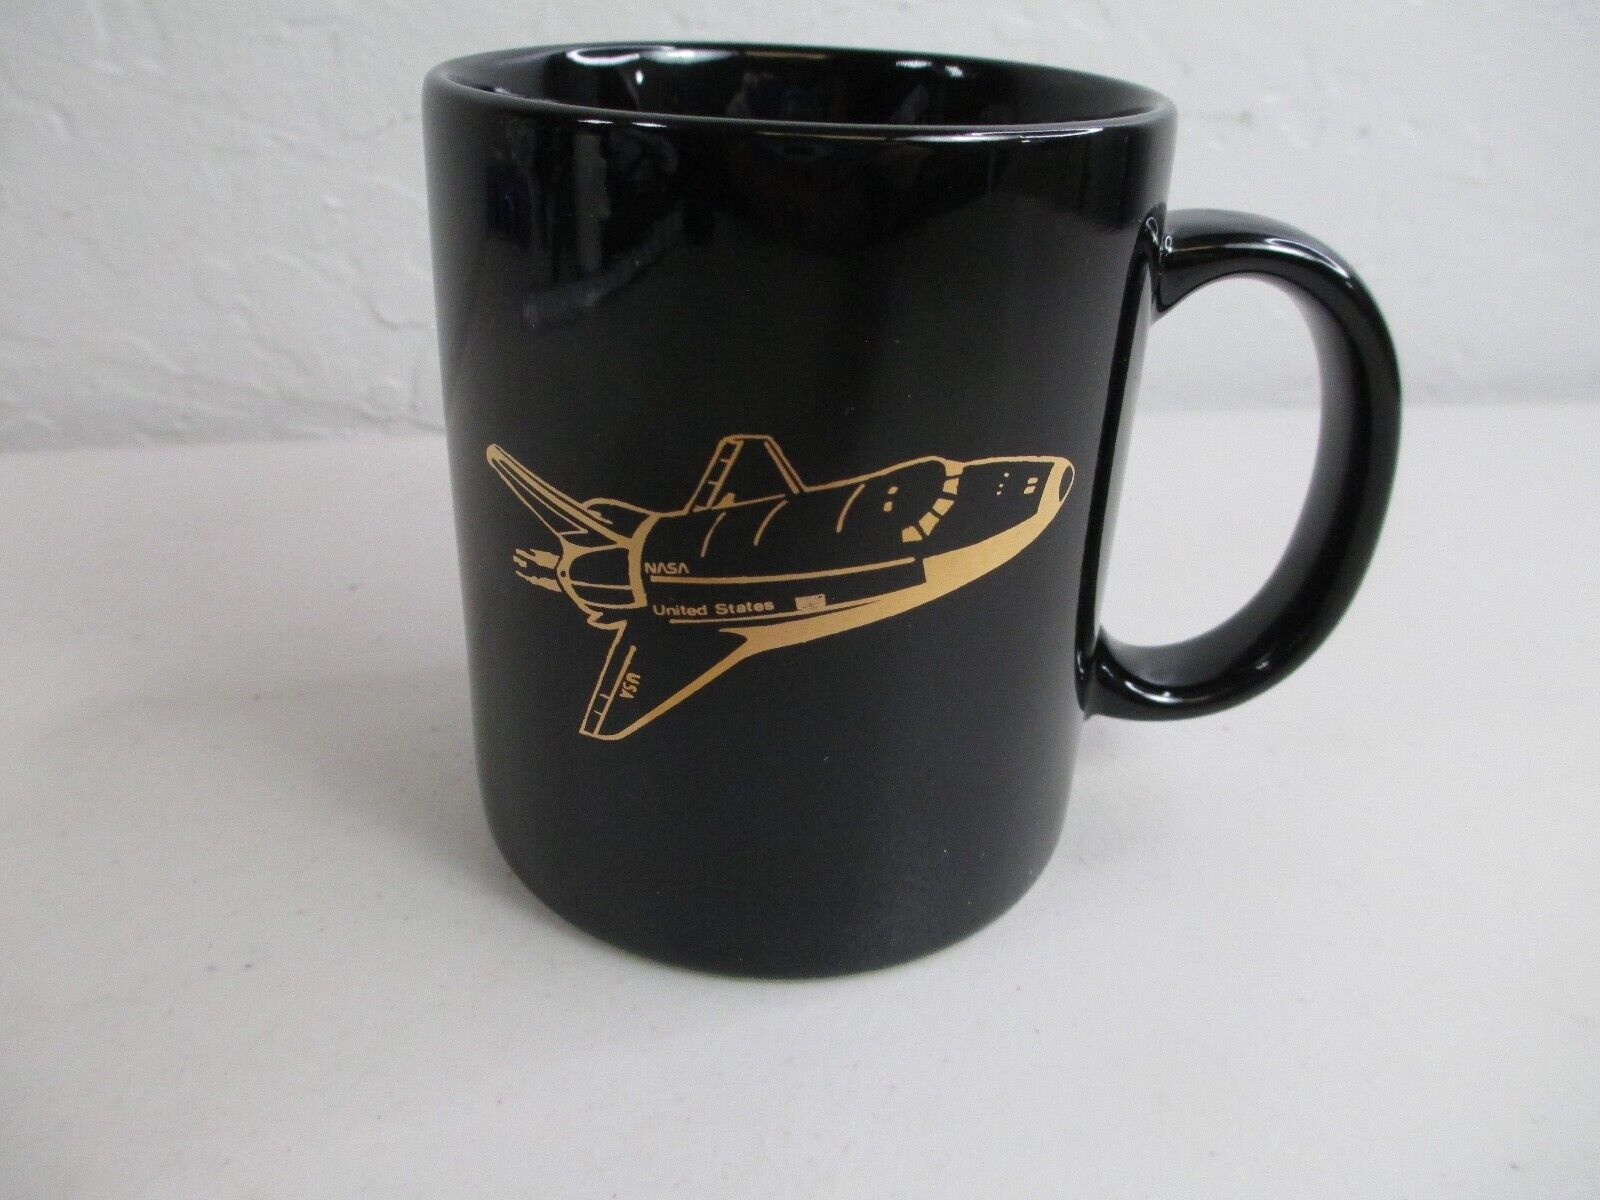 Vintage Nasa Coffee mug Gold glitter letters on black space shuttle